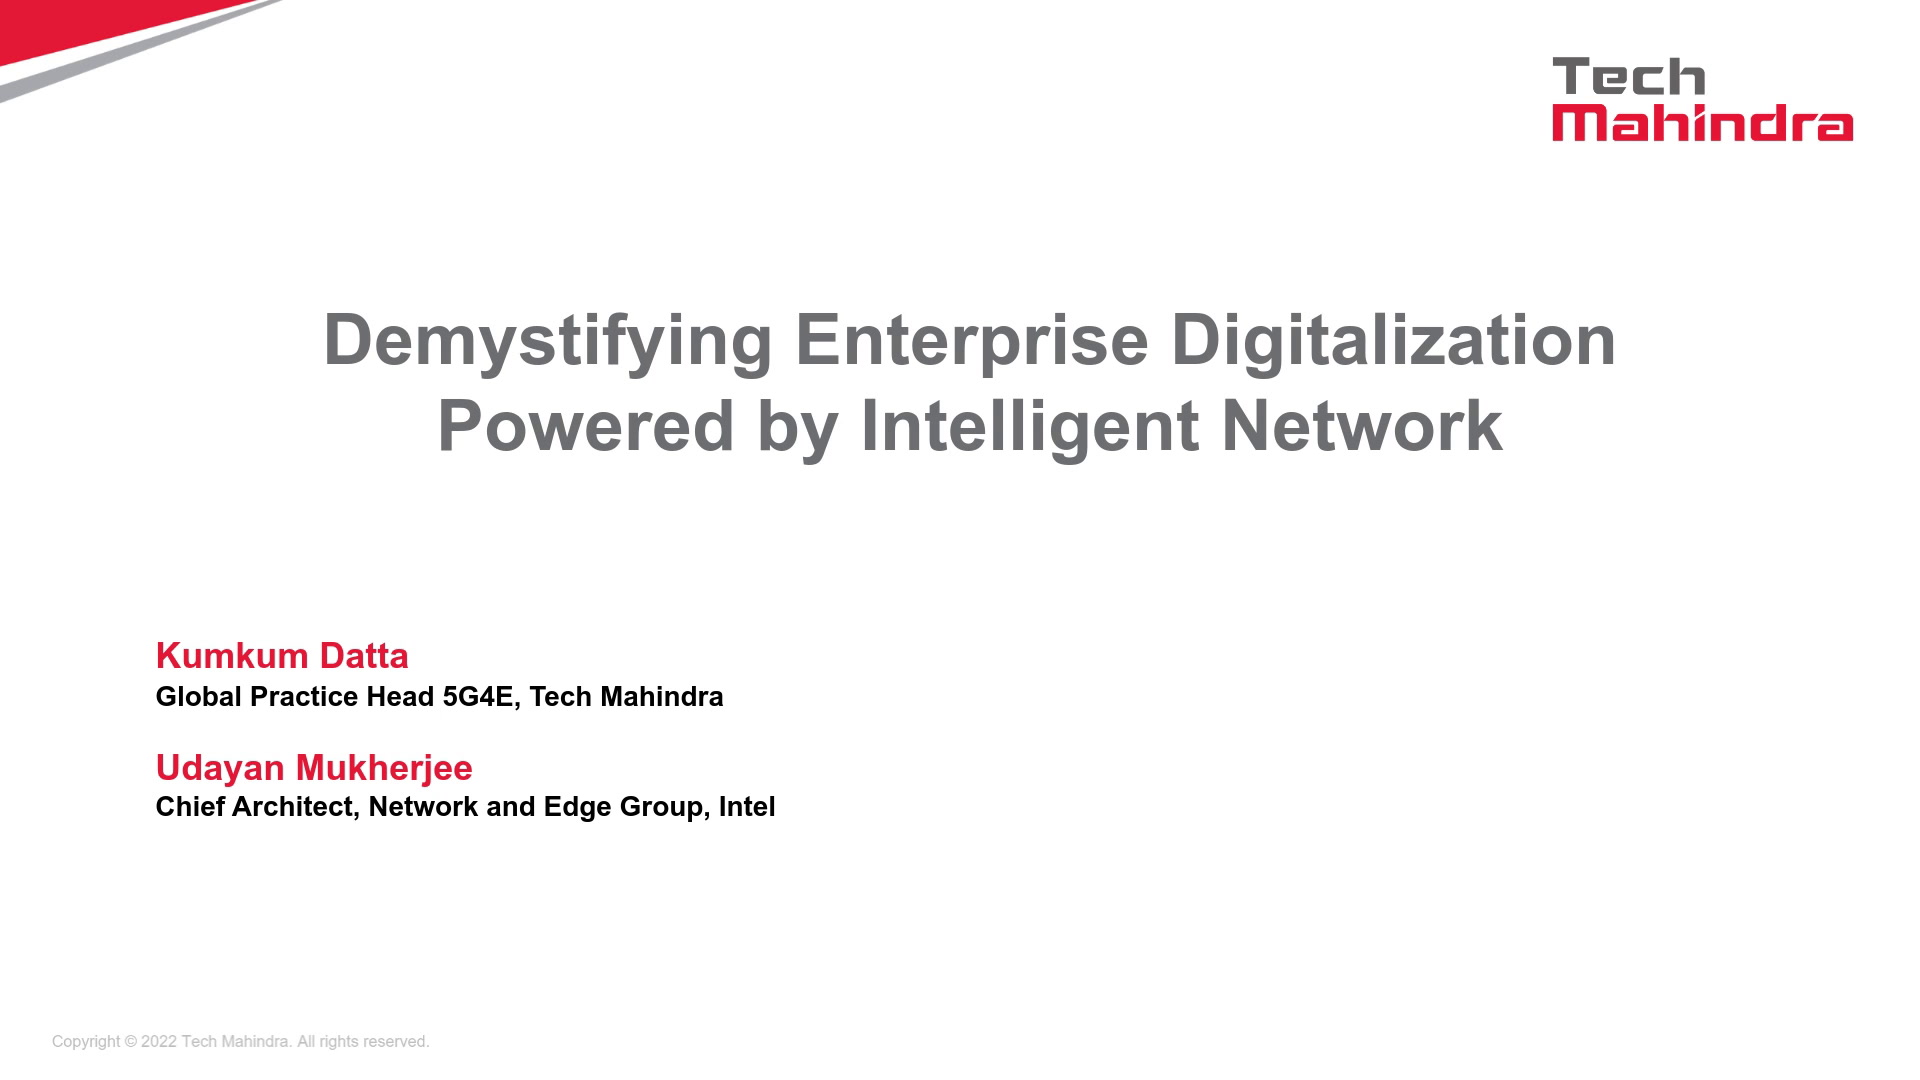 Demystifying Enterprise Digitalization Powered by Intelligent Network